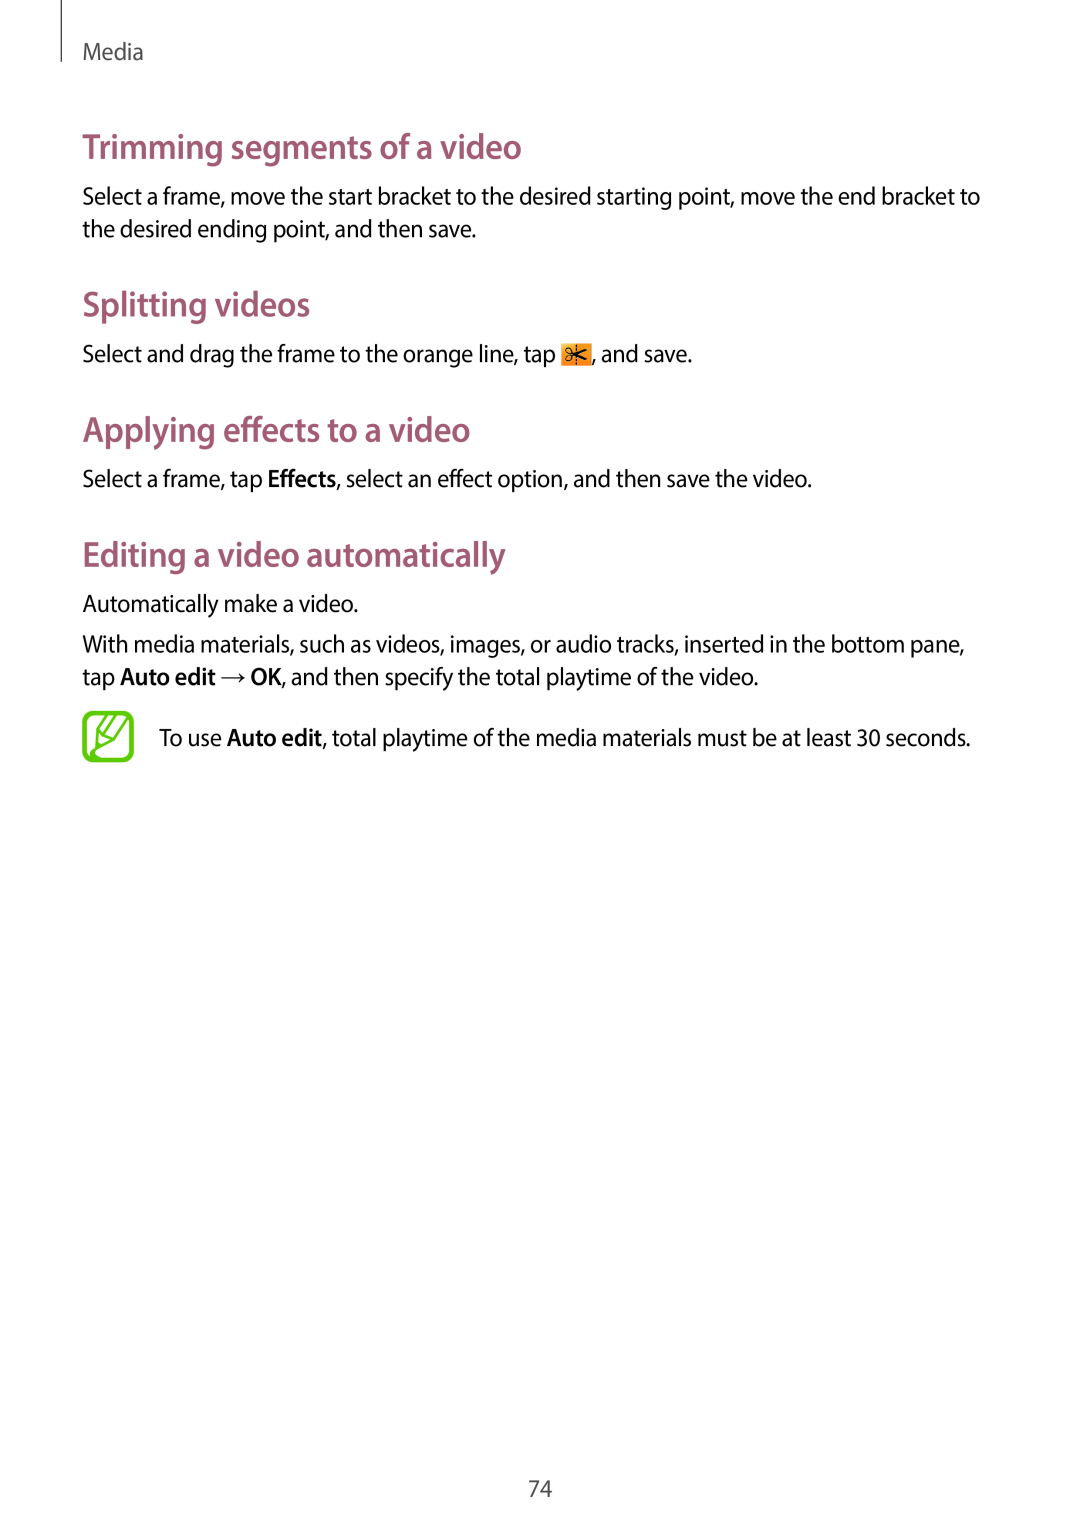 Samsung EK-GC100 user manual Trimming segments of a video, Splitting videos, Applying effects to a video, Media 